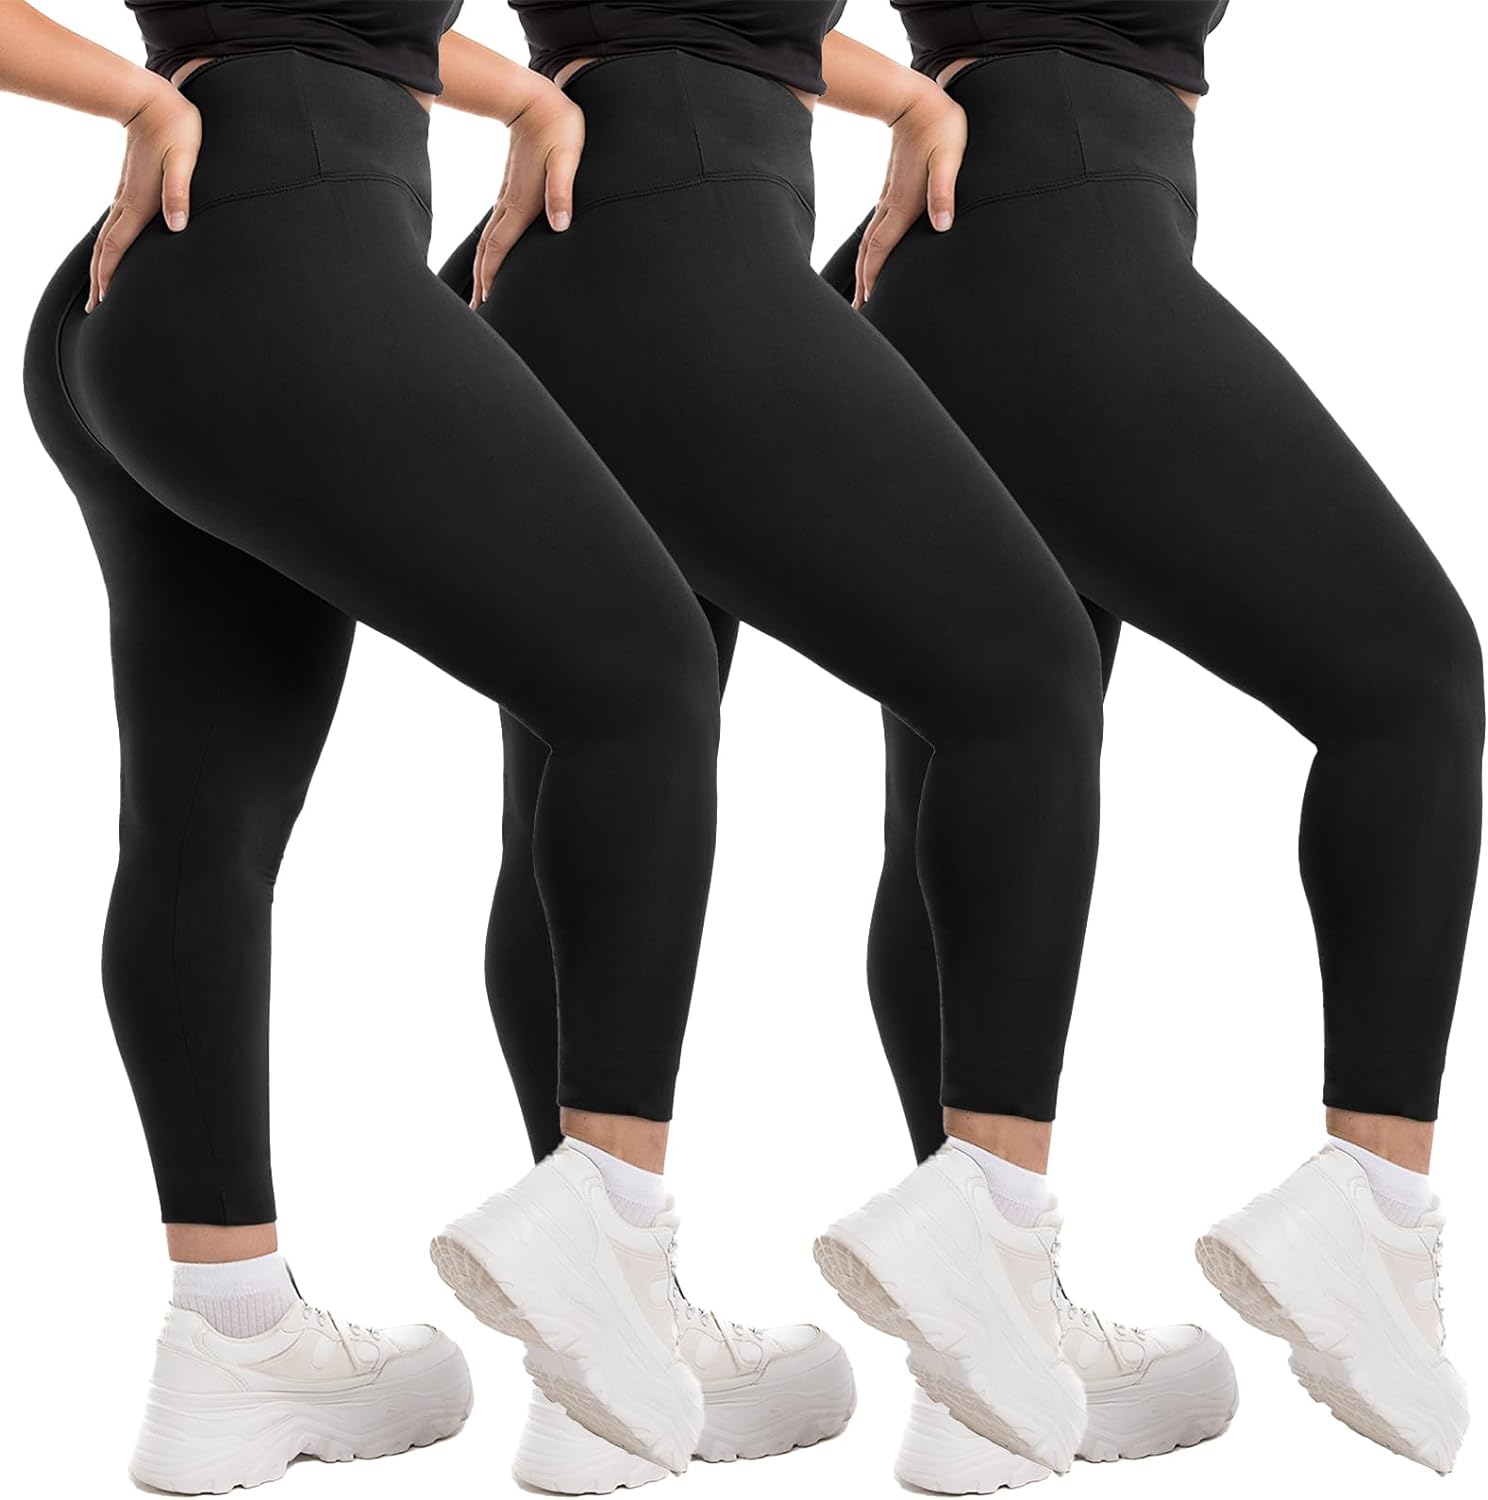 Walifrey High Waist Plus Size Leggings for Women, Buttery Soft Plus Size Leggings